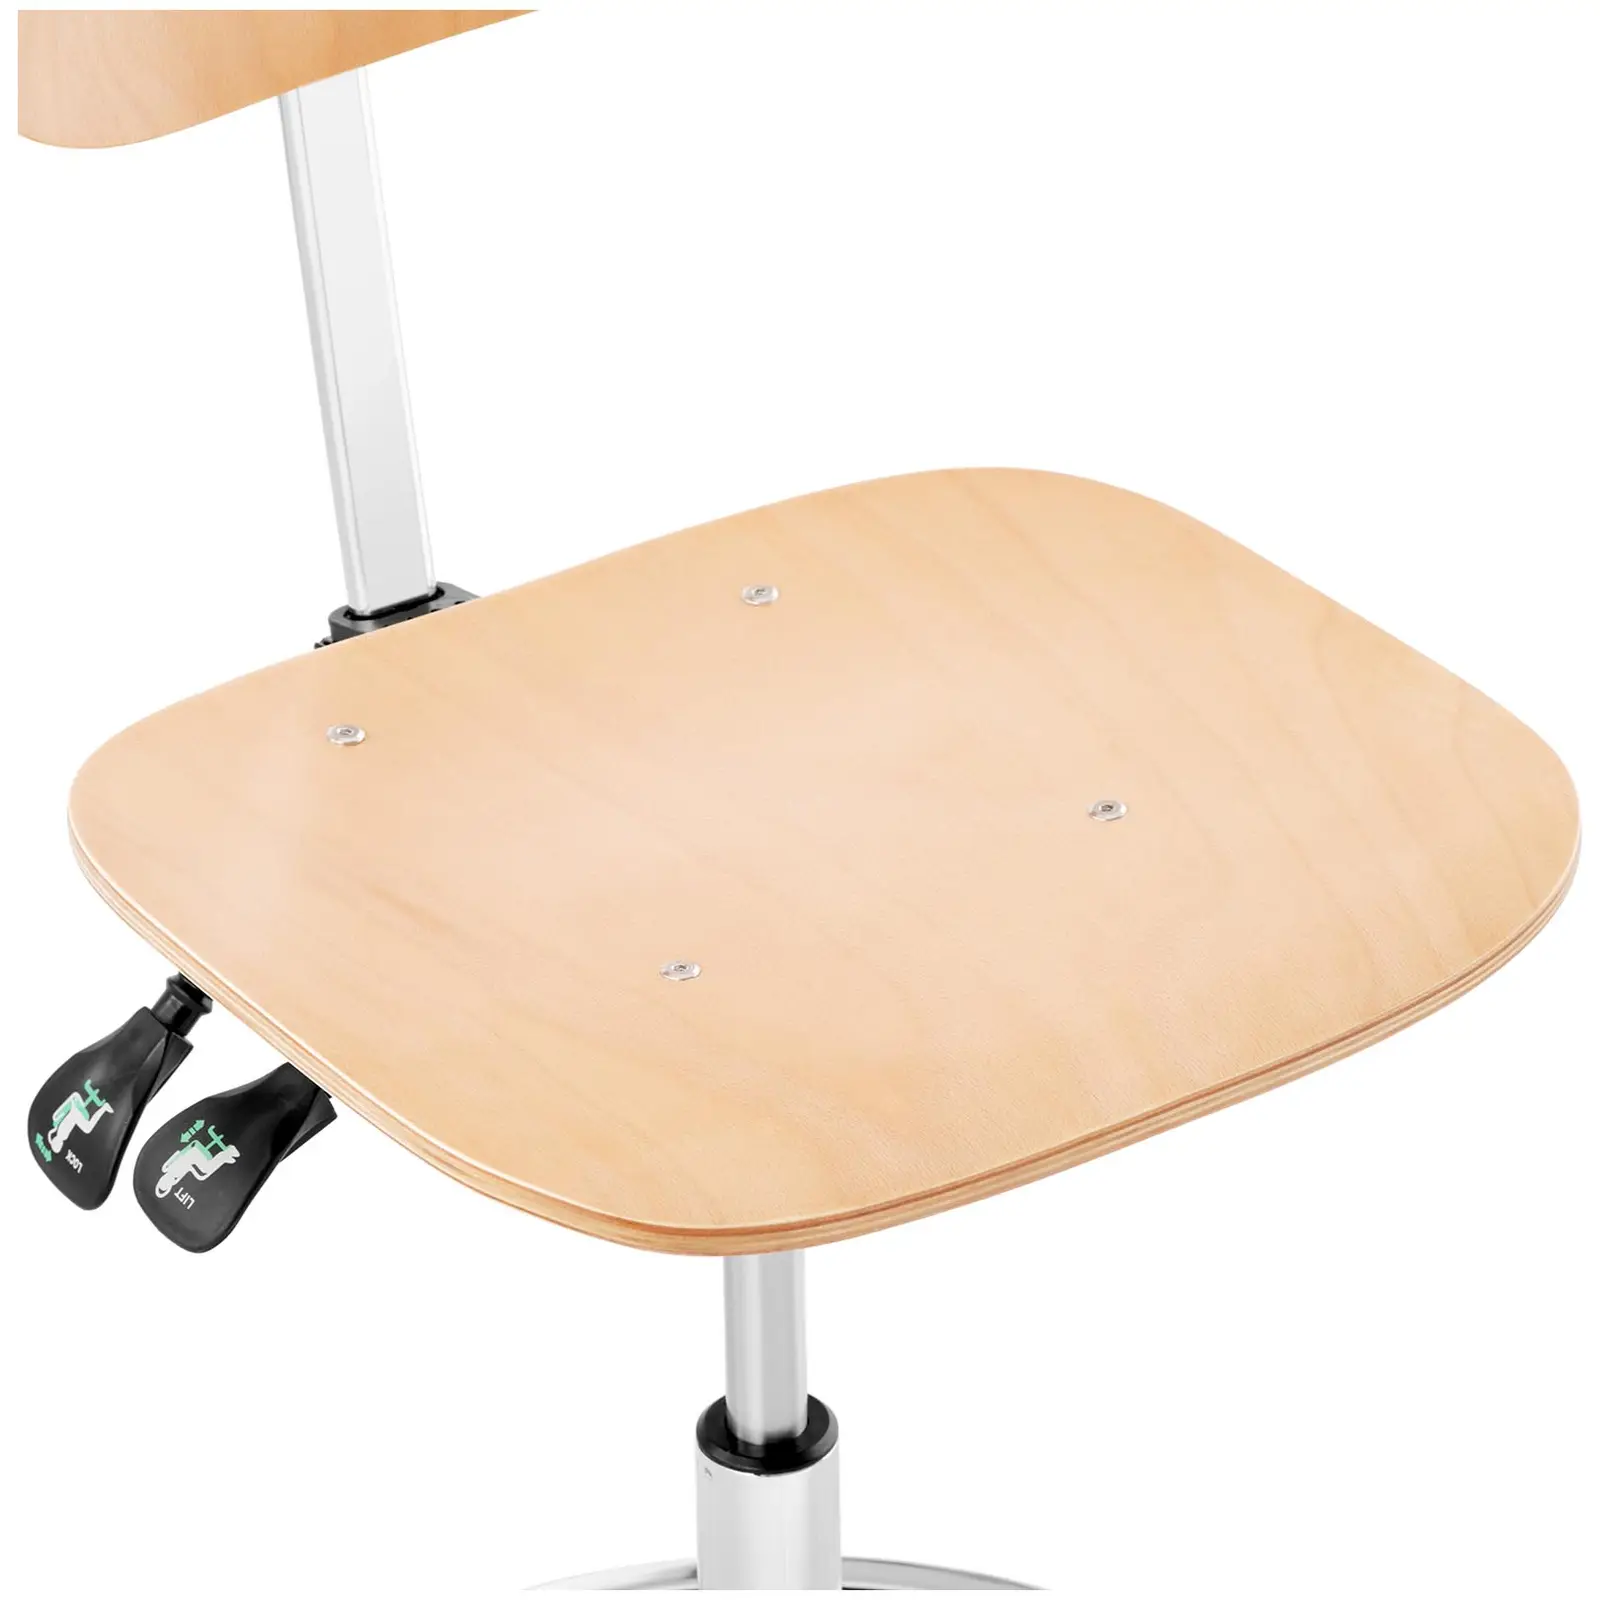 Cadeira de oficina - 120 kg - madeira, elementos cromados - apoio para os pés - altura 550 - 800 mm